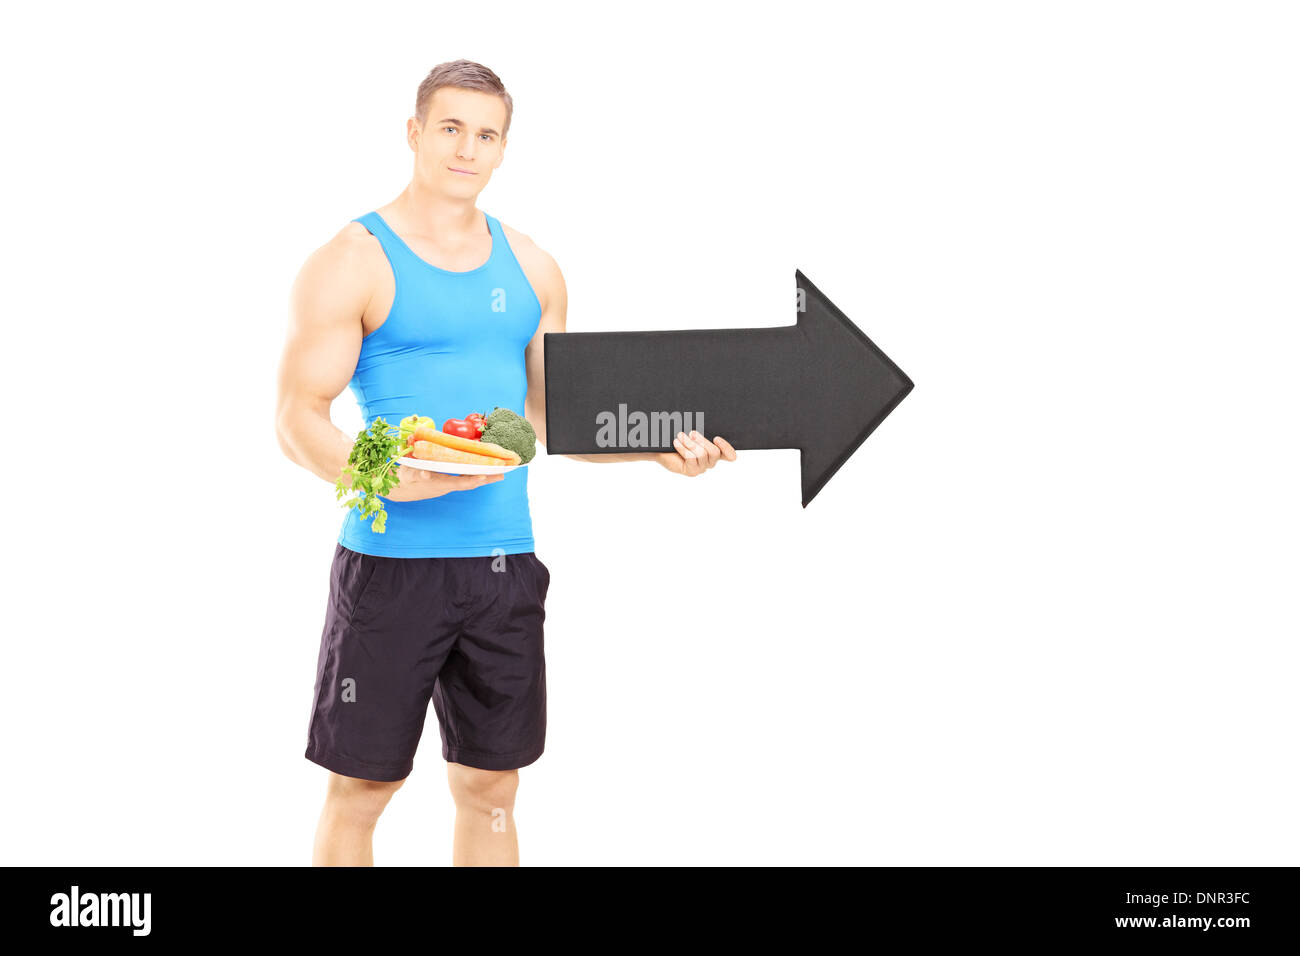 Gym instructor holding dish and big black arrow Stock Photo